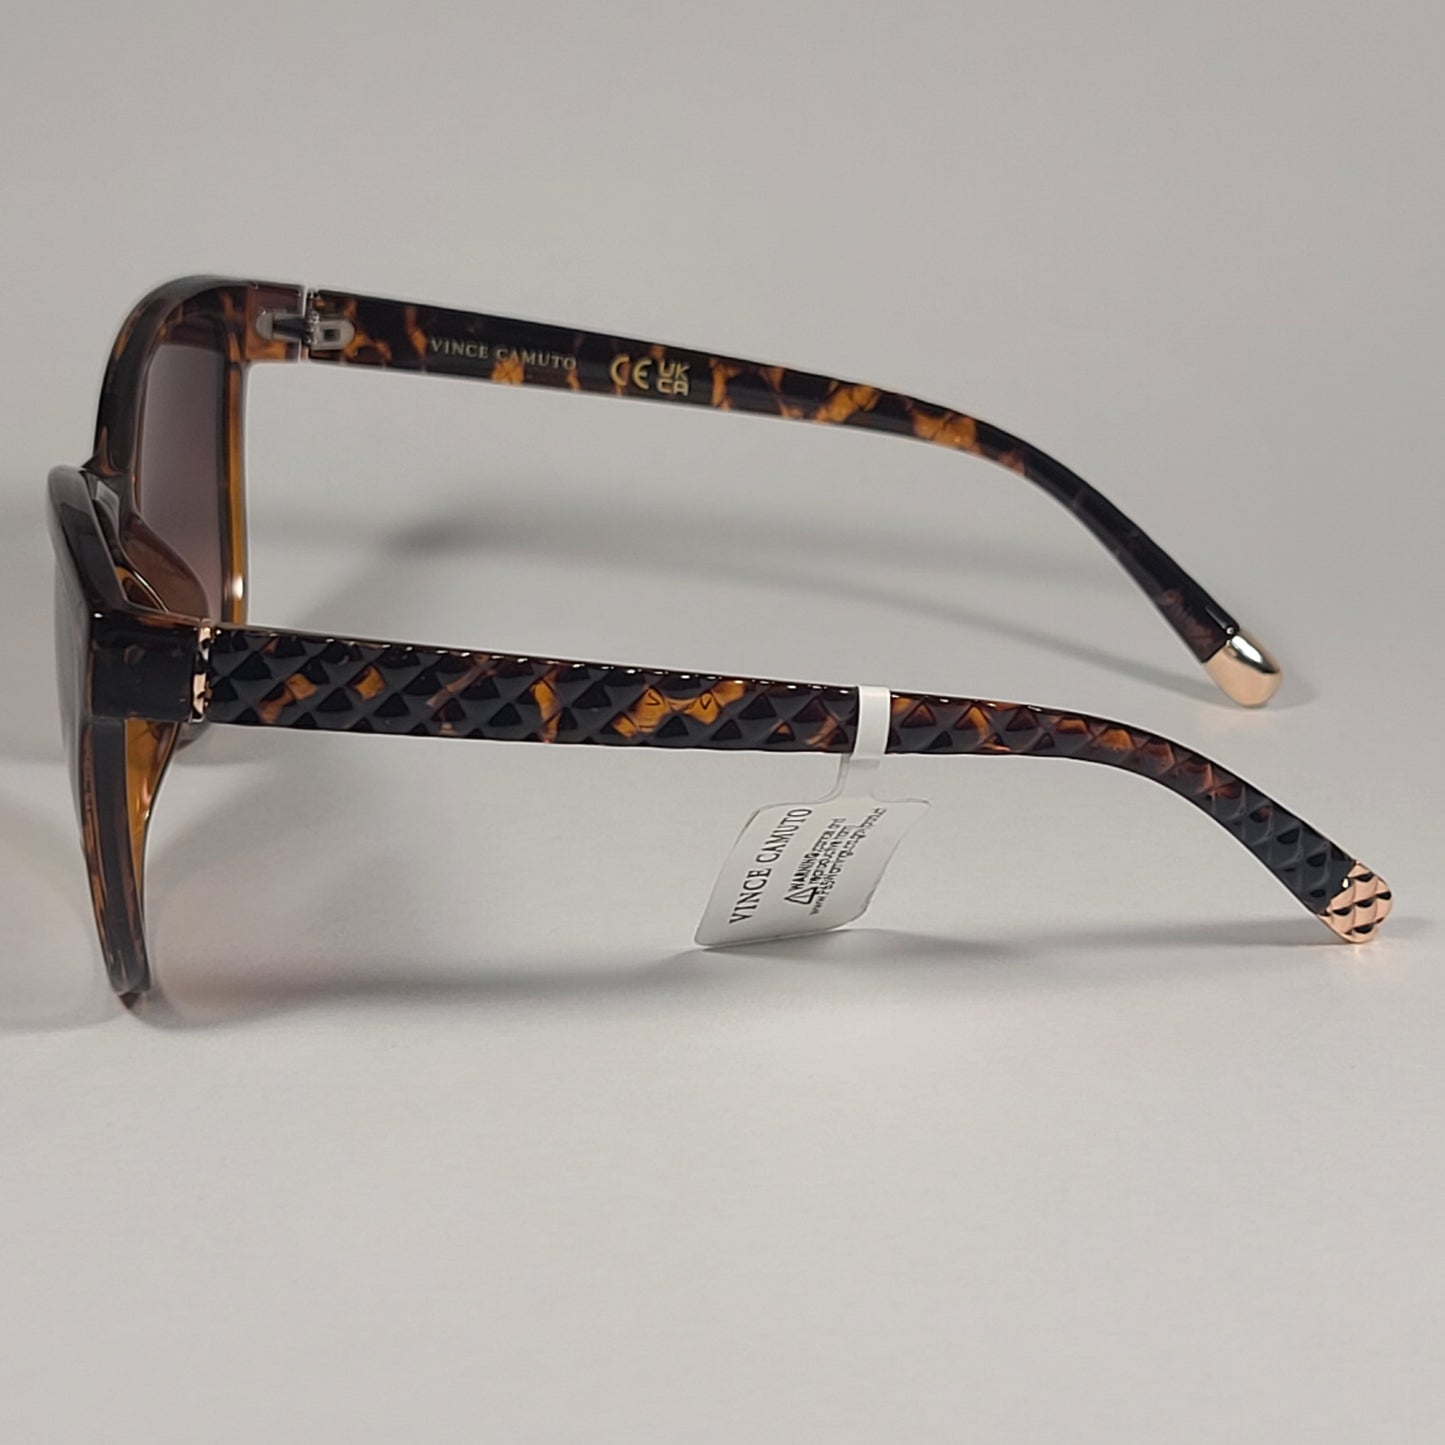 Vince Camuto VC1063 TS Cat Eye Sunglasses Brown Tortoise Frame Brown Gradient Lens - Sunglasses